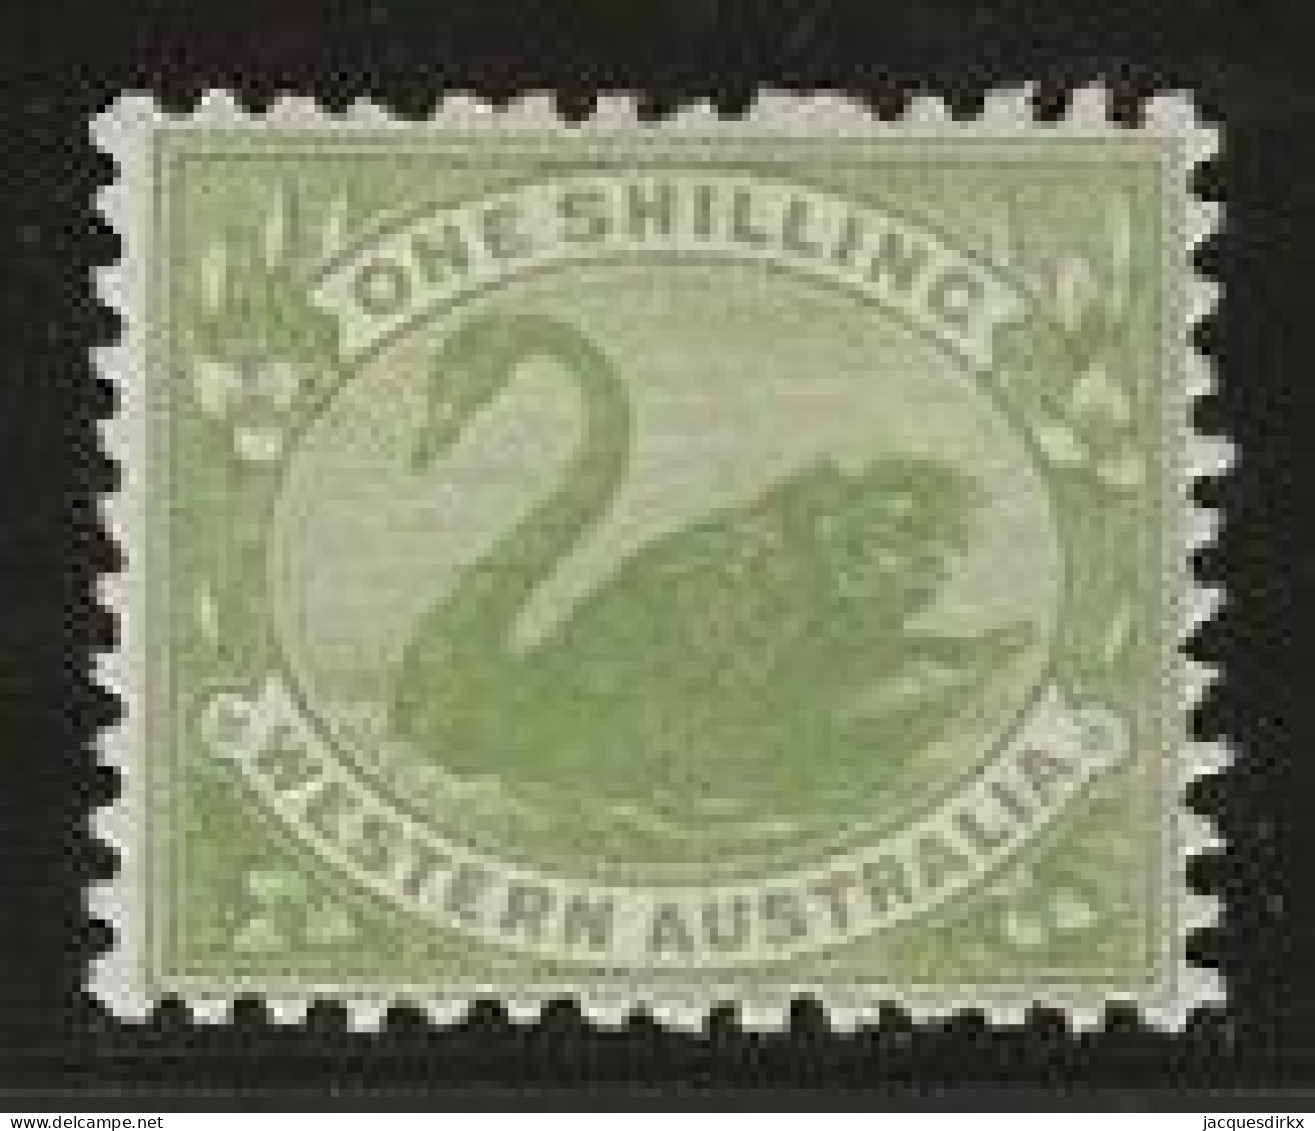 Western Australia     .   SG    .    169       .   *       .     Mint-hinged - Neufs